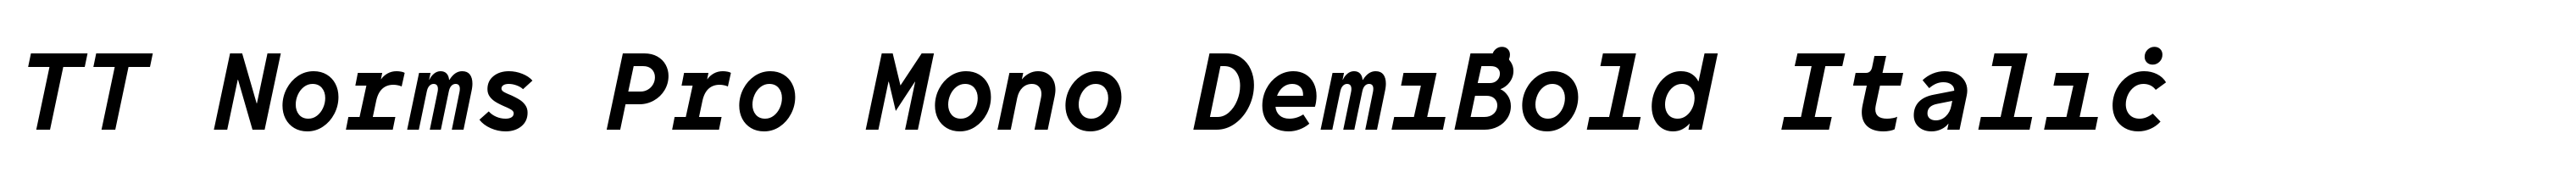 TT Norms Pro Mono DemiBold Italic